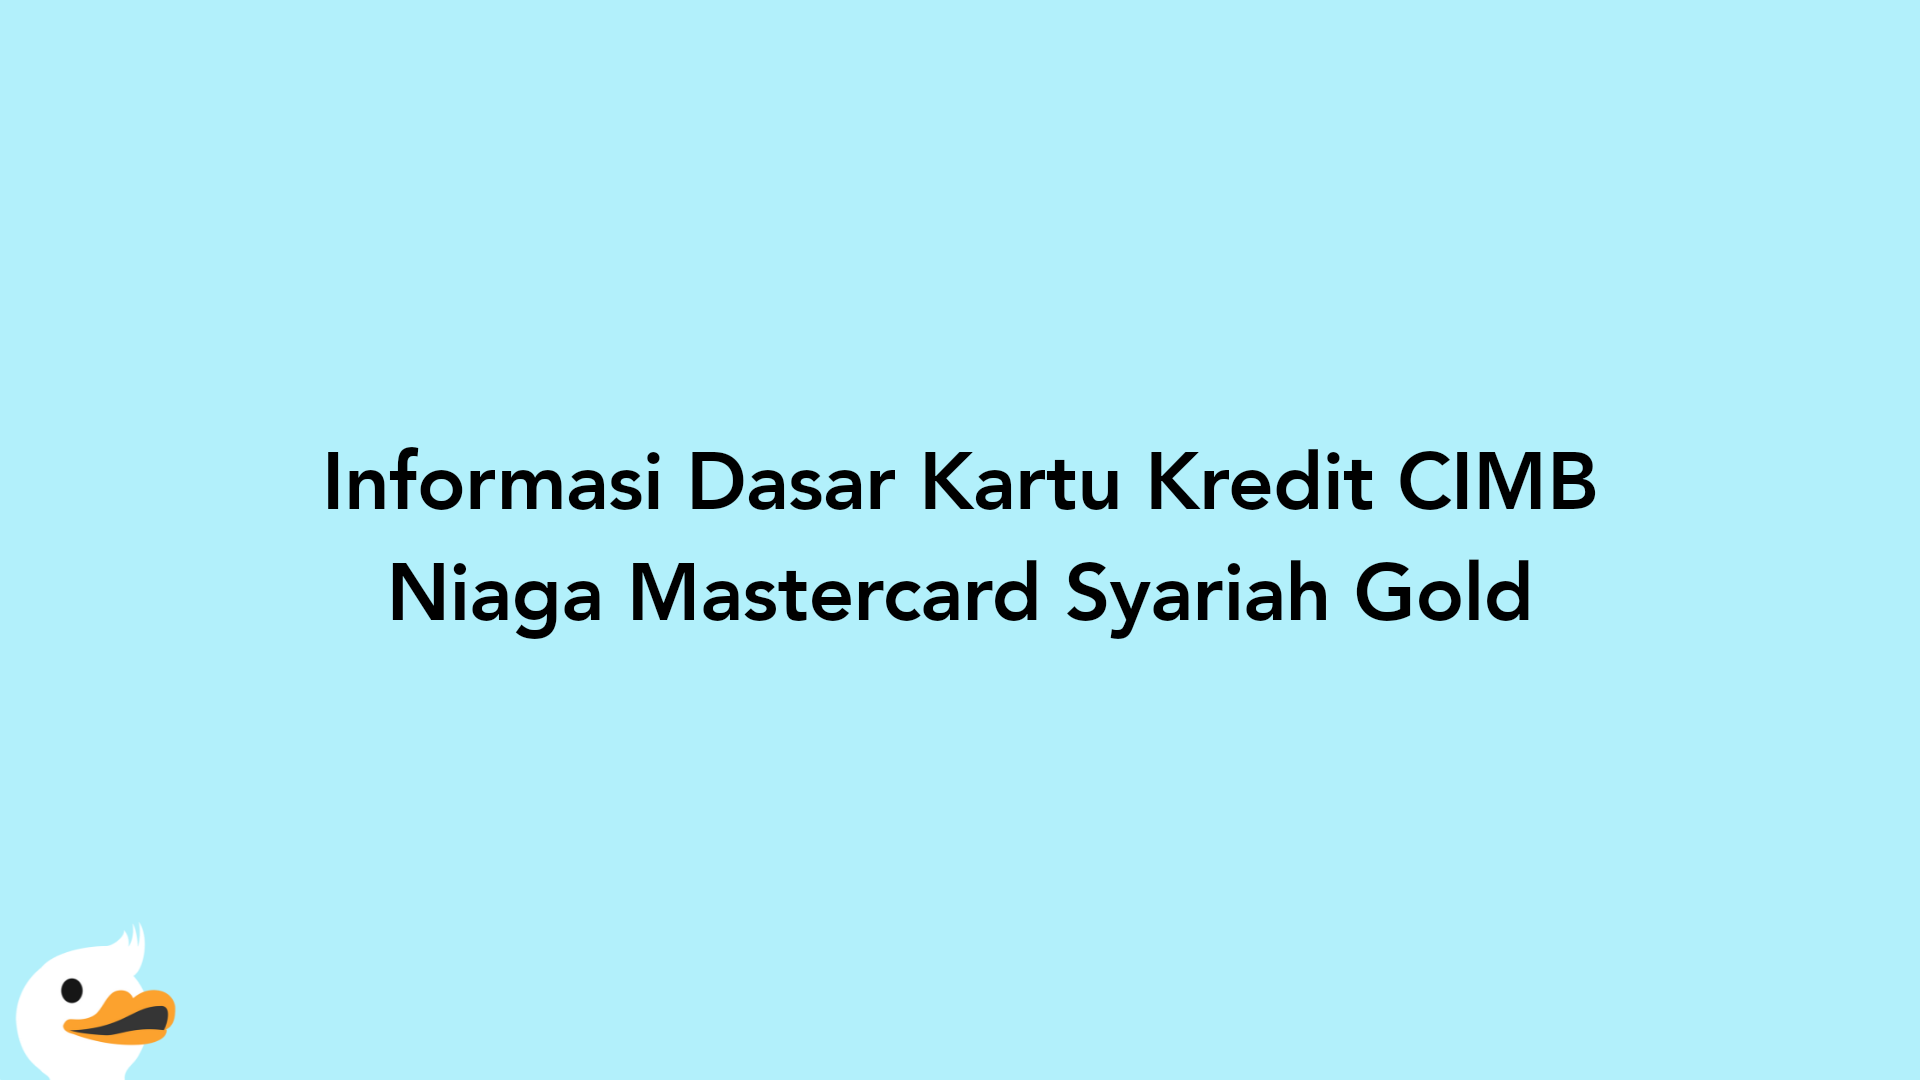 Informasi Dasar Kartu Kredit CIMB Niaga Mastercard Syariah Gold